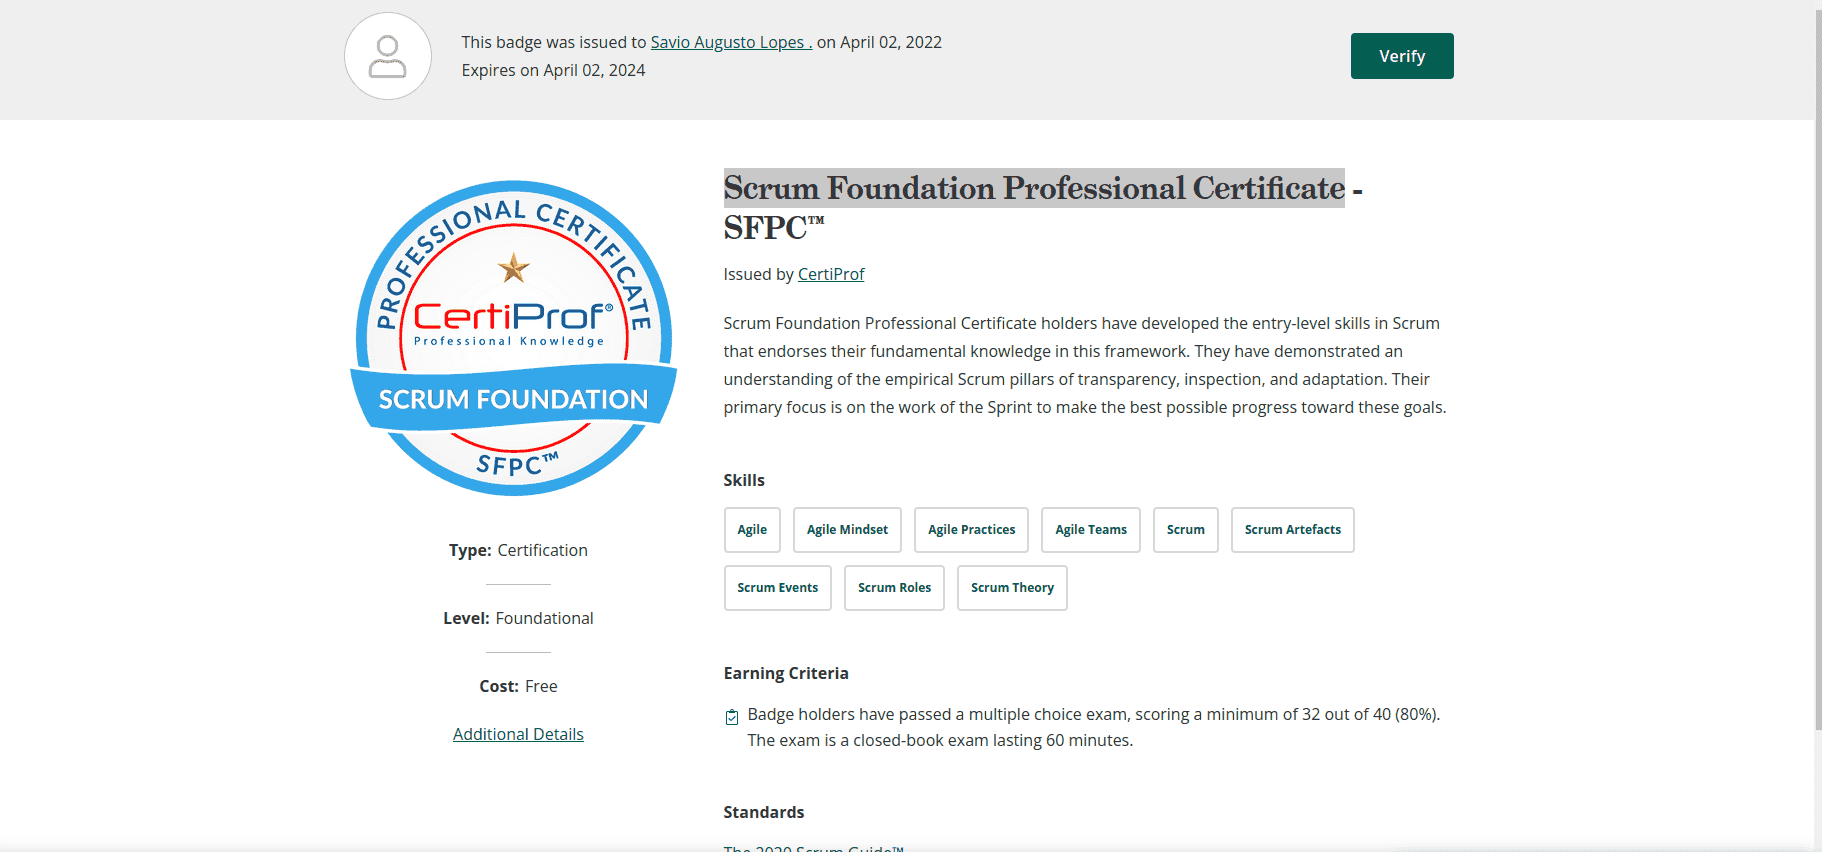 Scrum Foundation Professional Certificate (SFPC™)